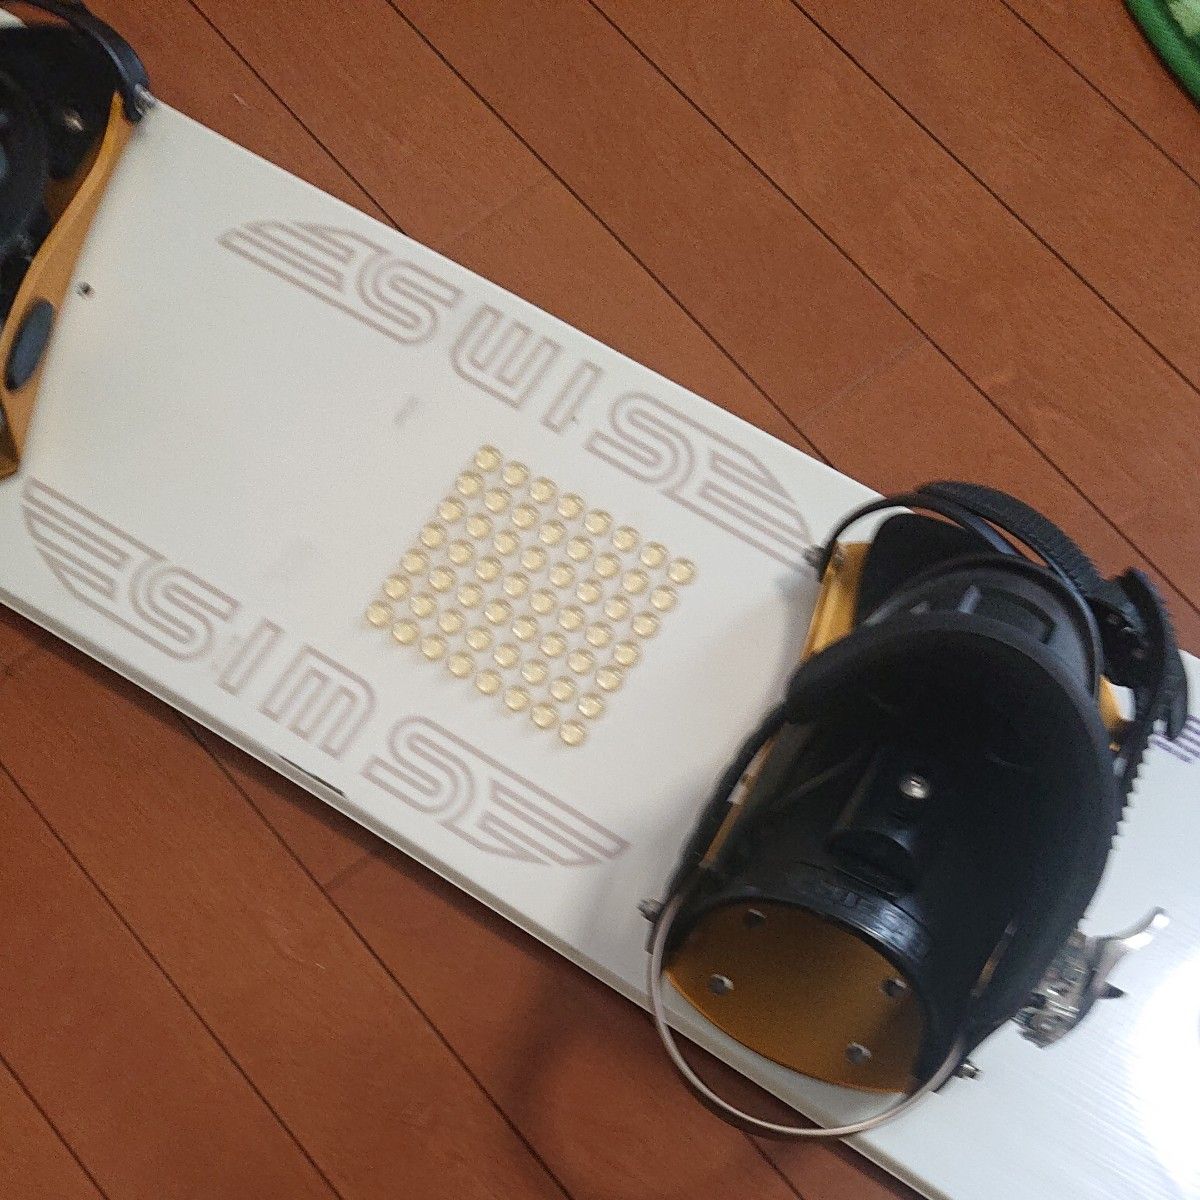 SIMS スノーボード ビンディング付き  ヴィンテージ物 希少 オシャレで格好良いボード